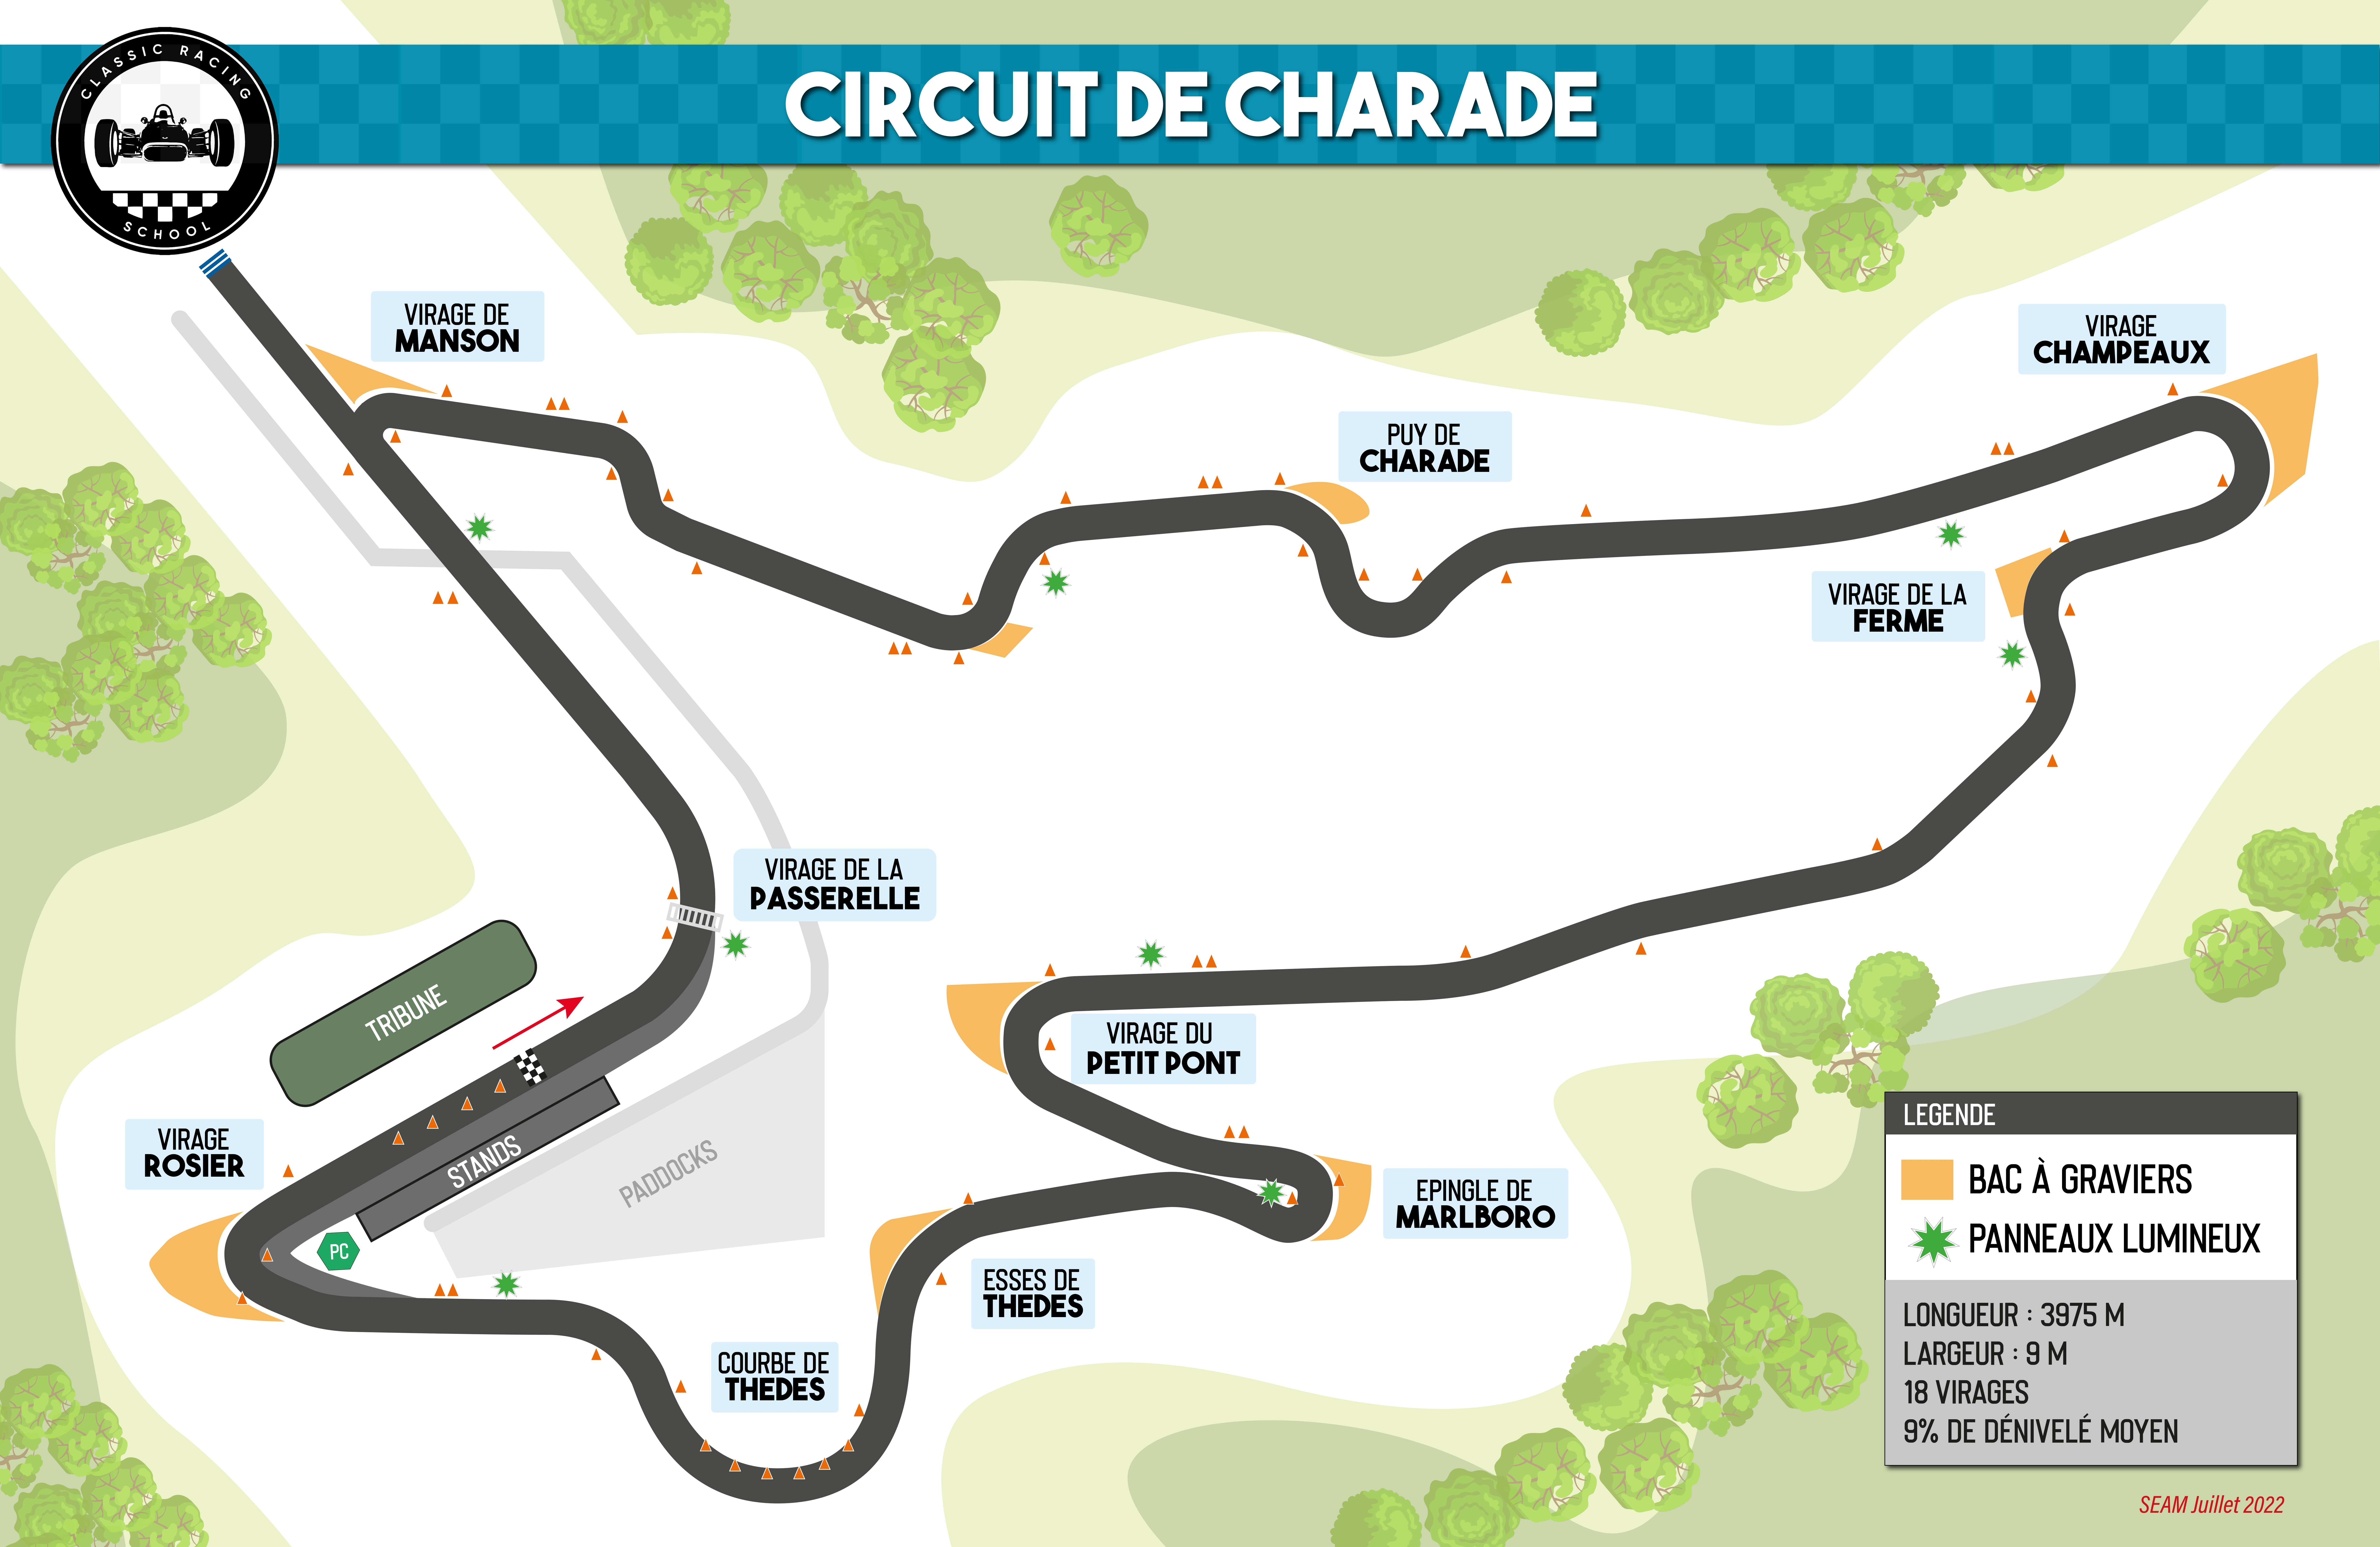 Charade circuit layout